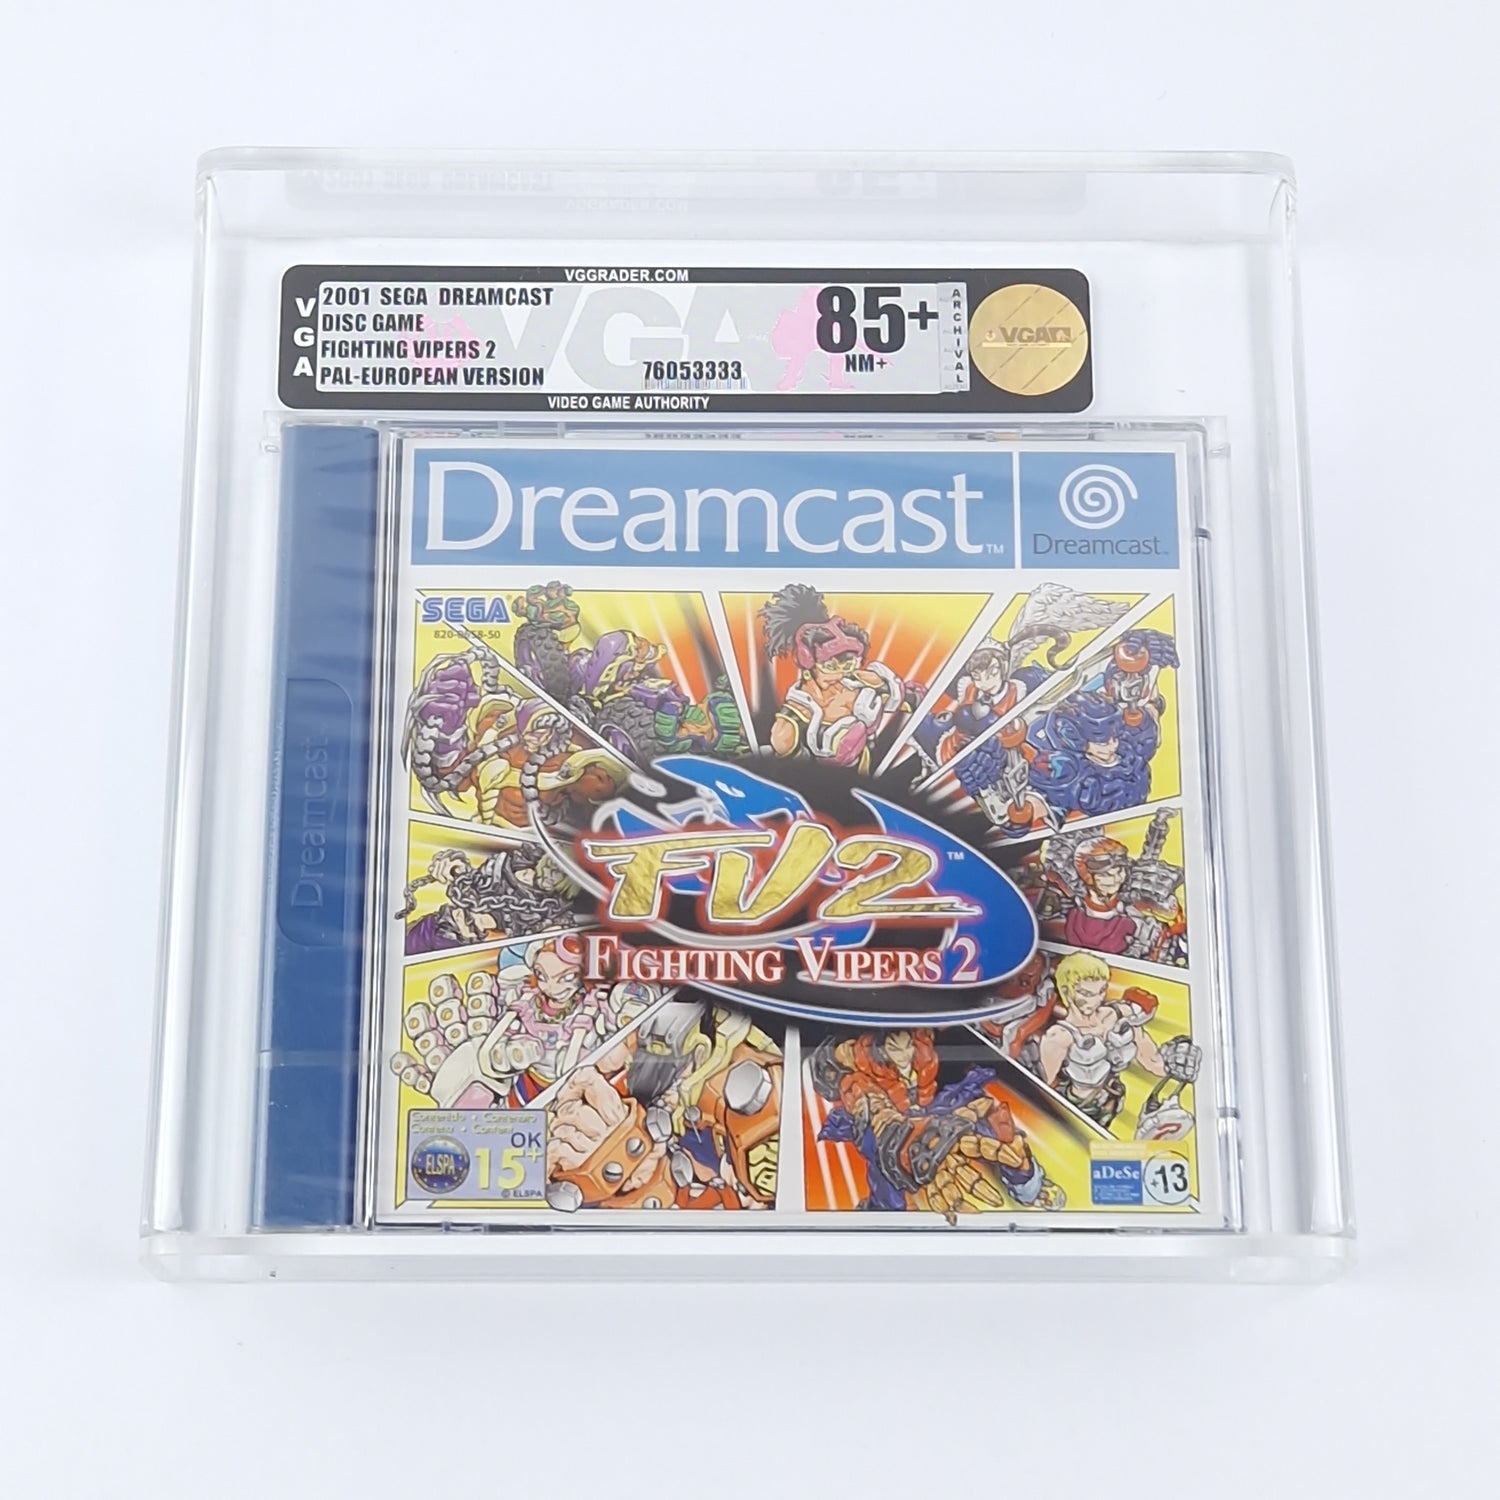 Sega Dreamcast Game: FV2 Fighting Vipers 2 - DC PAL NEW SEALED | VGA 85+ NM+